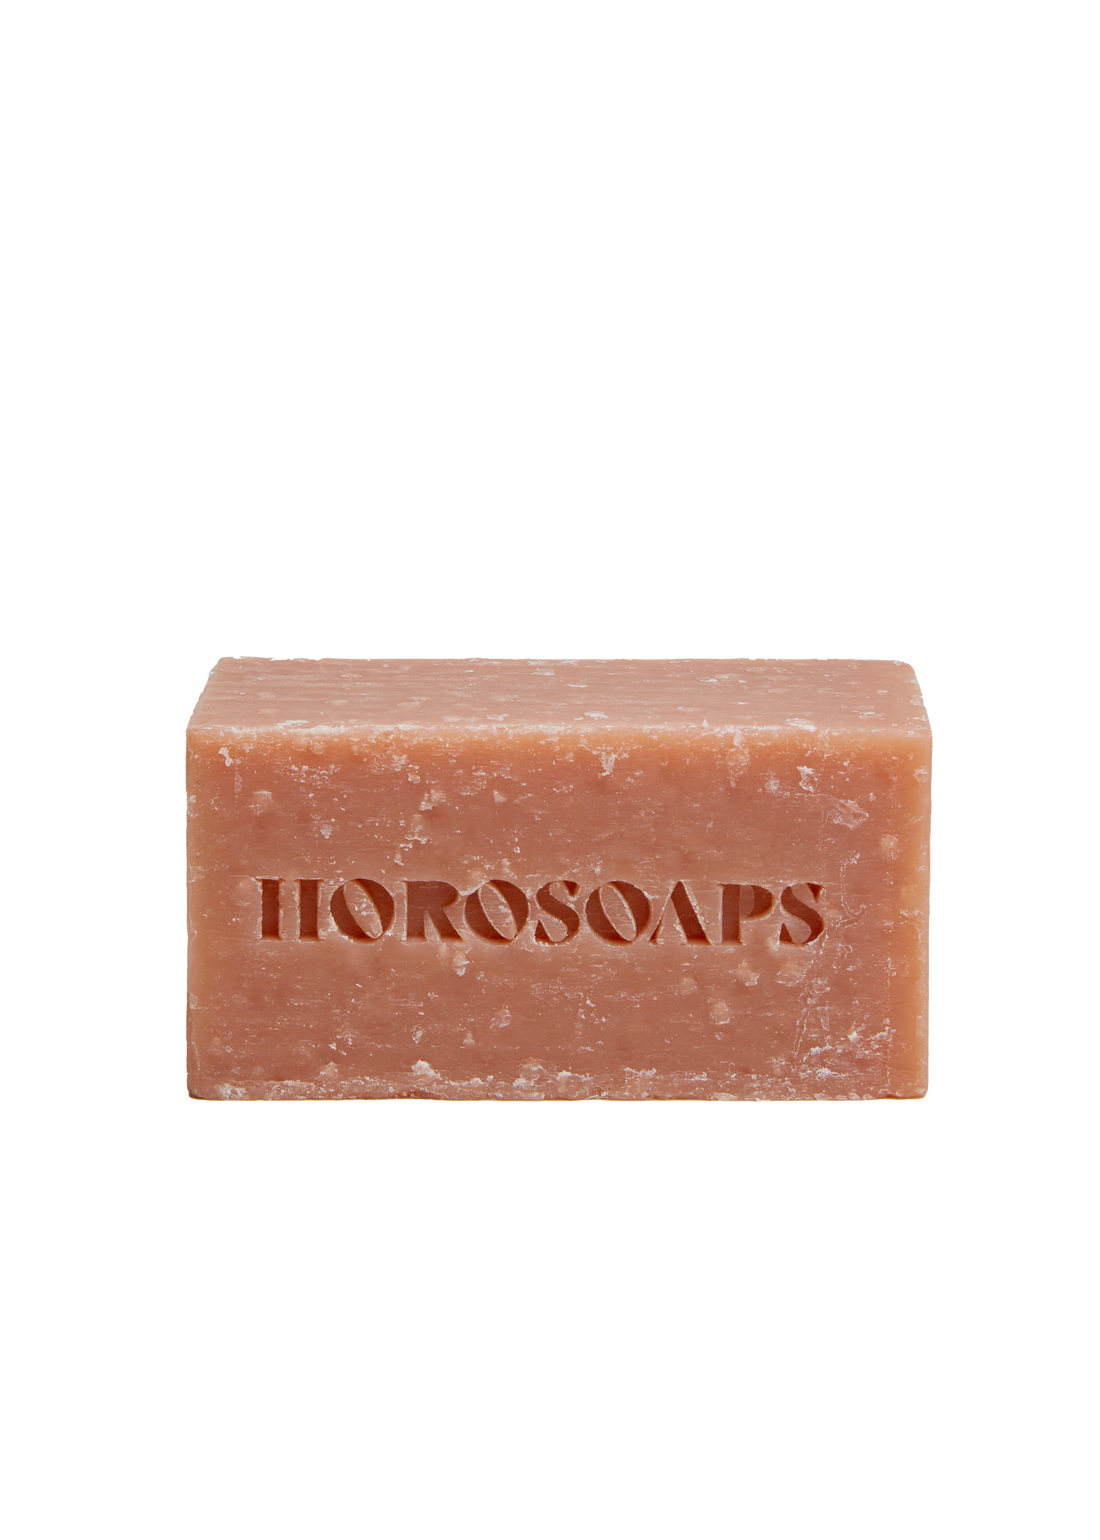 Aquarius Soap Bar